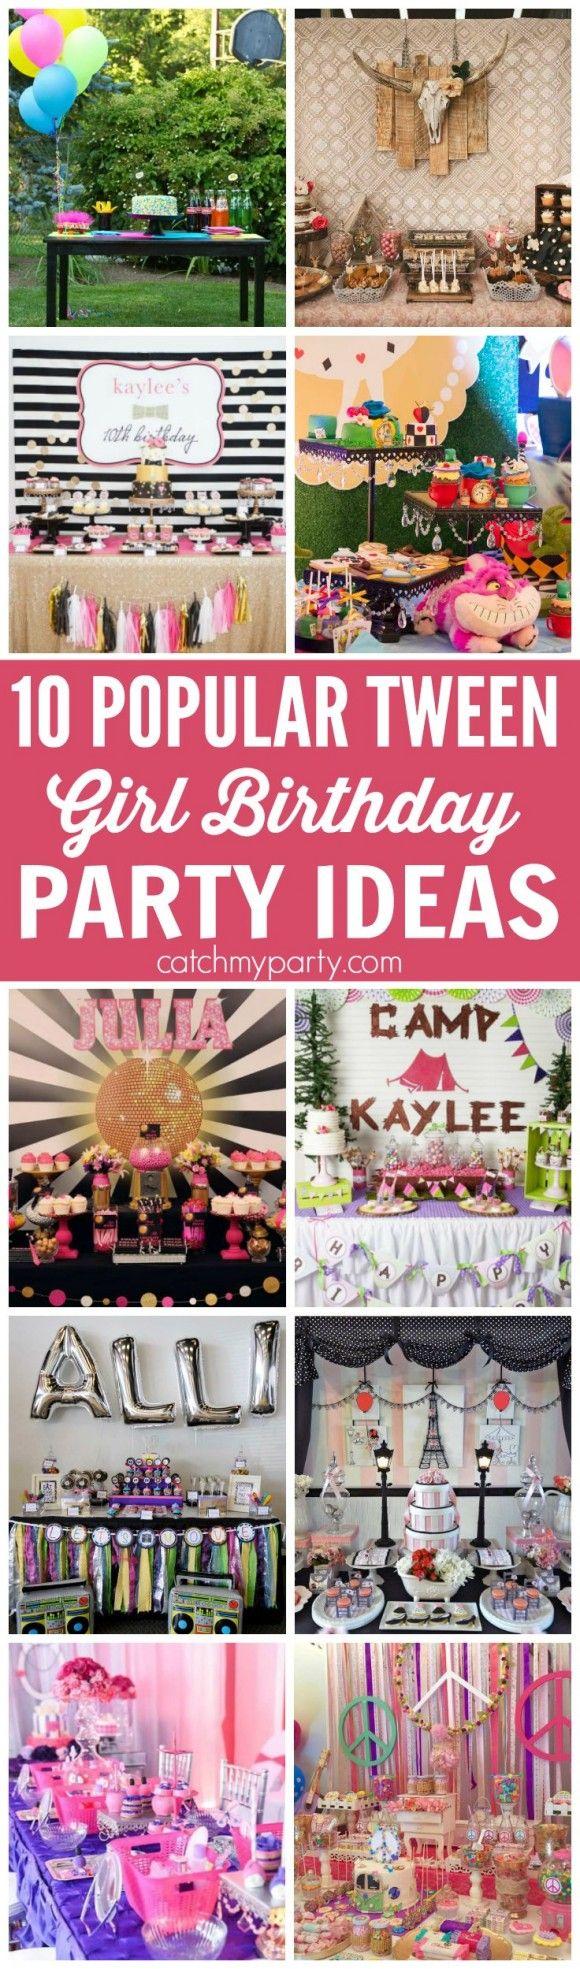 Wedding - 10 Popular Tween Girl Birthday Party Ideas